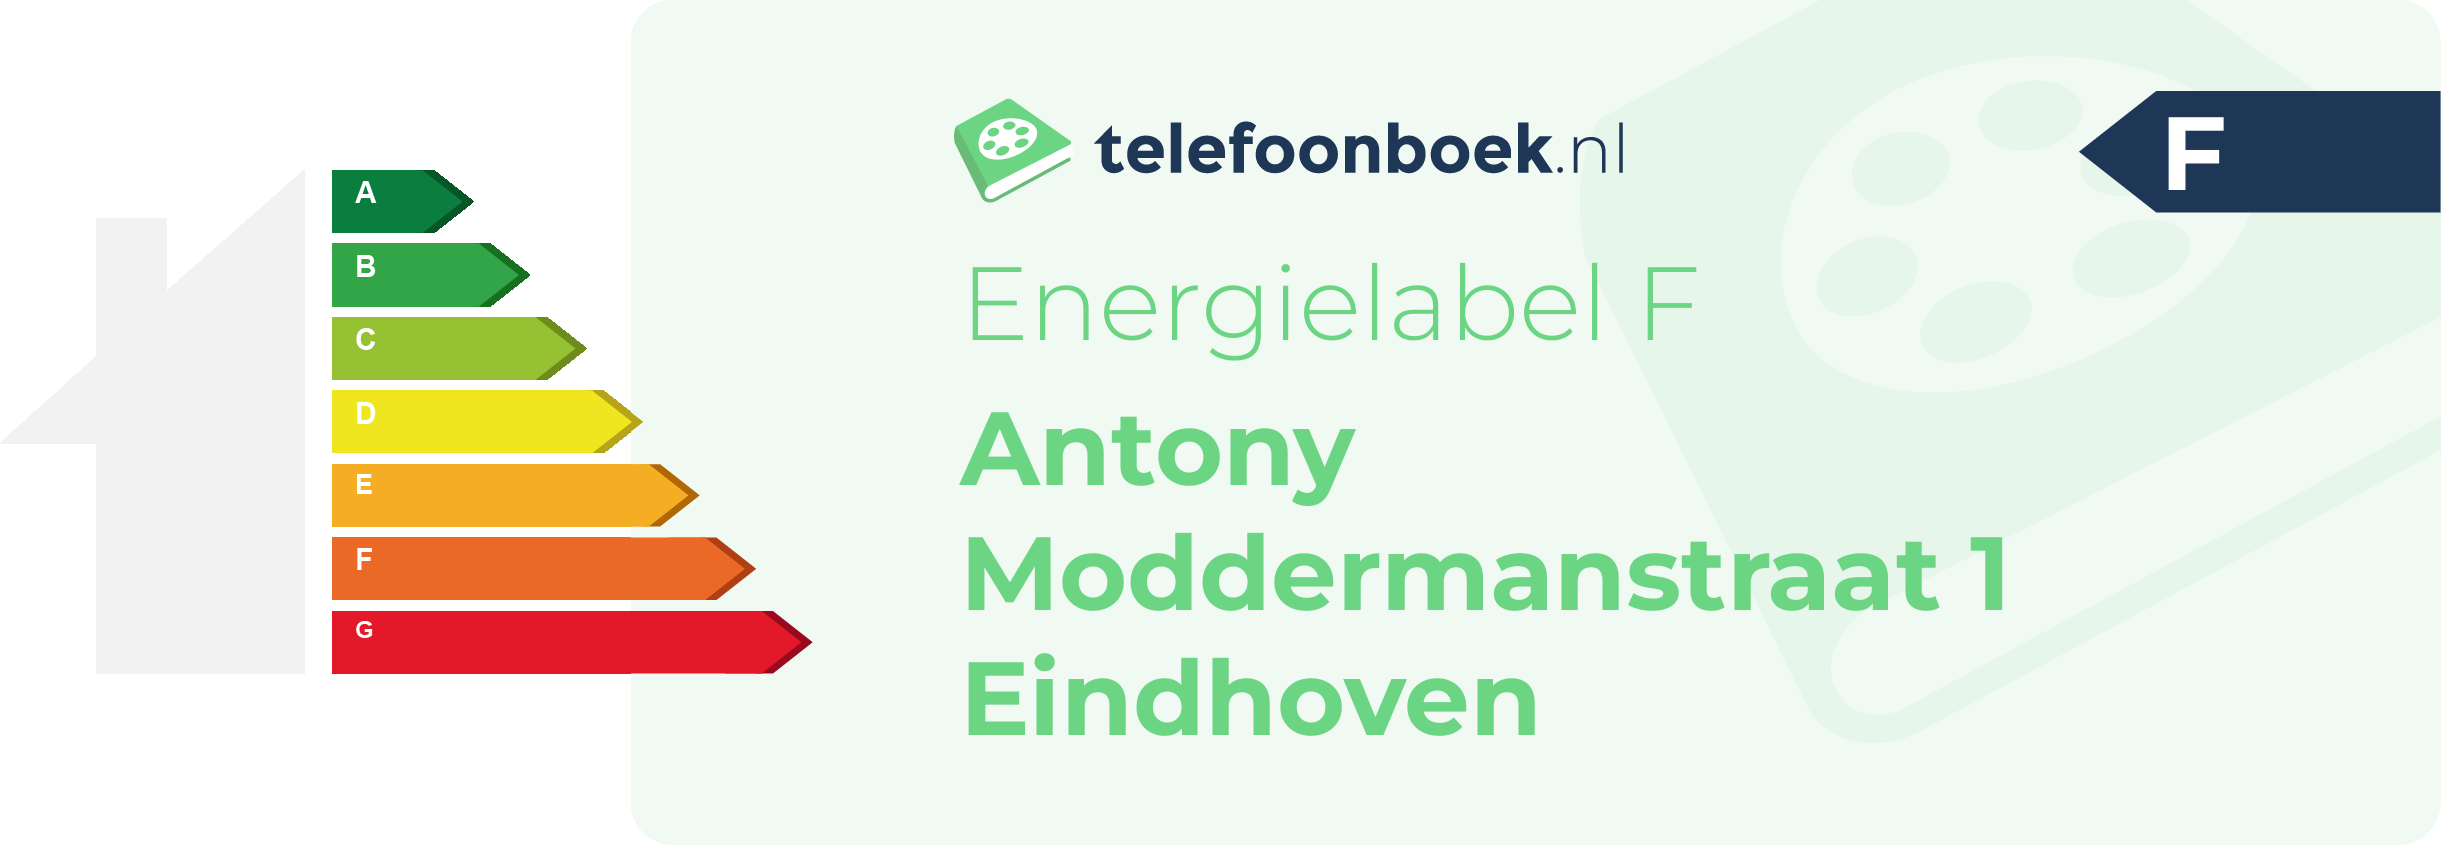 Energielabel Antony Moddermanstraat 1 Eindhoven